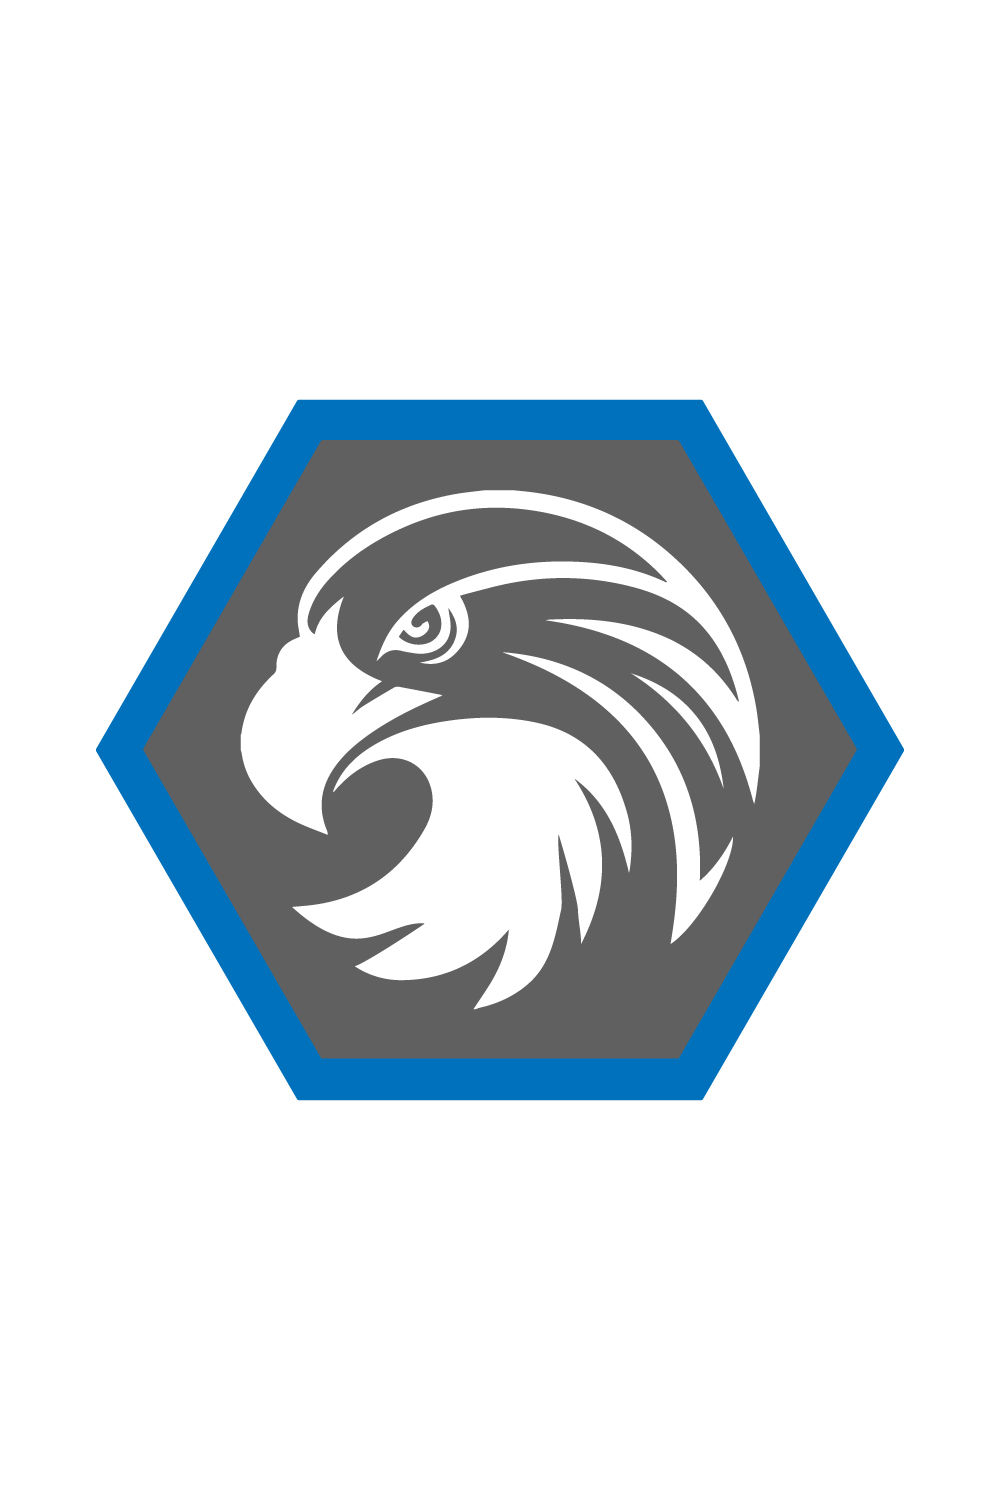 Eagle Bird Logo design vector images Luxury Bird logo design template icon Eagle Bird Face logo monogram best icon pinterest preview image.